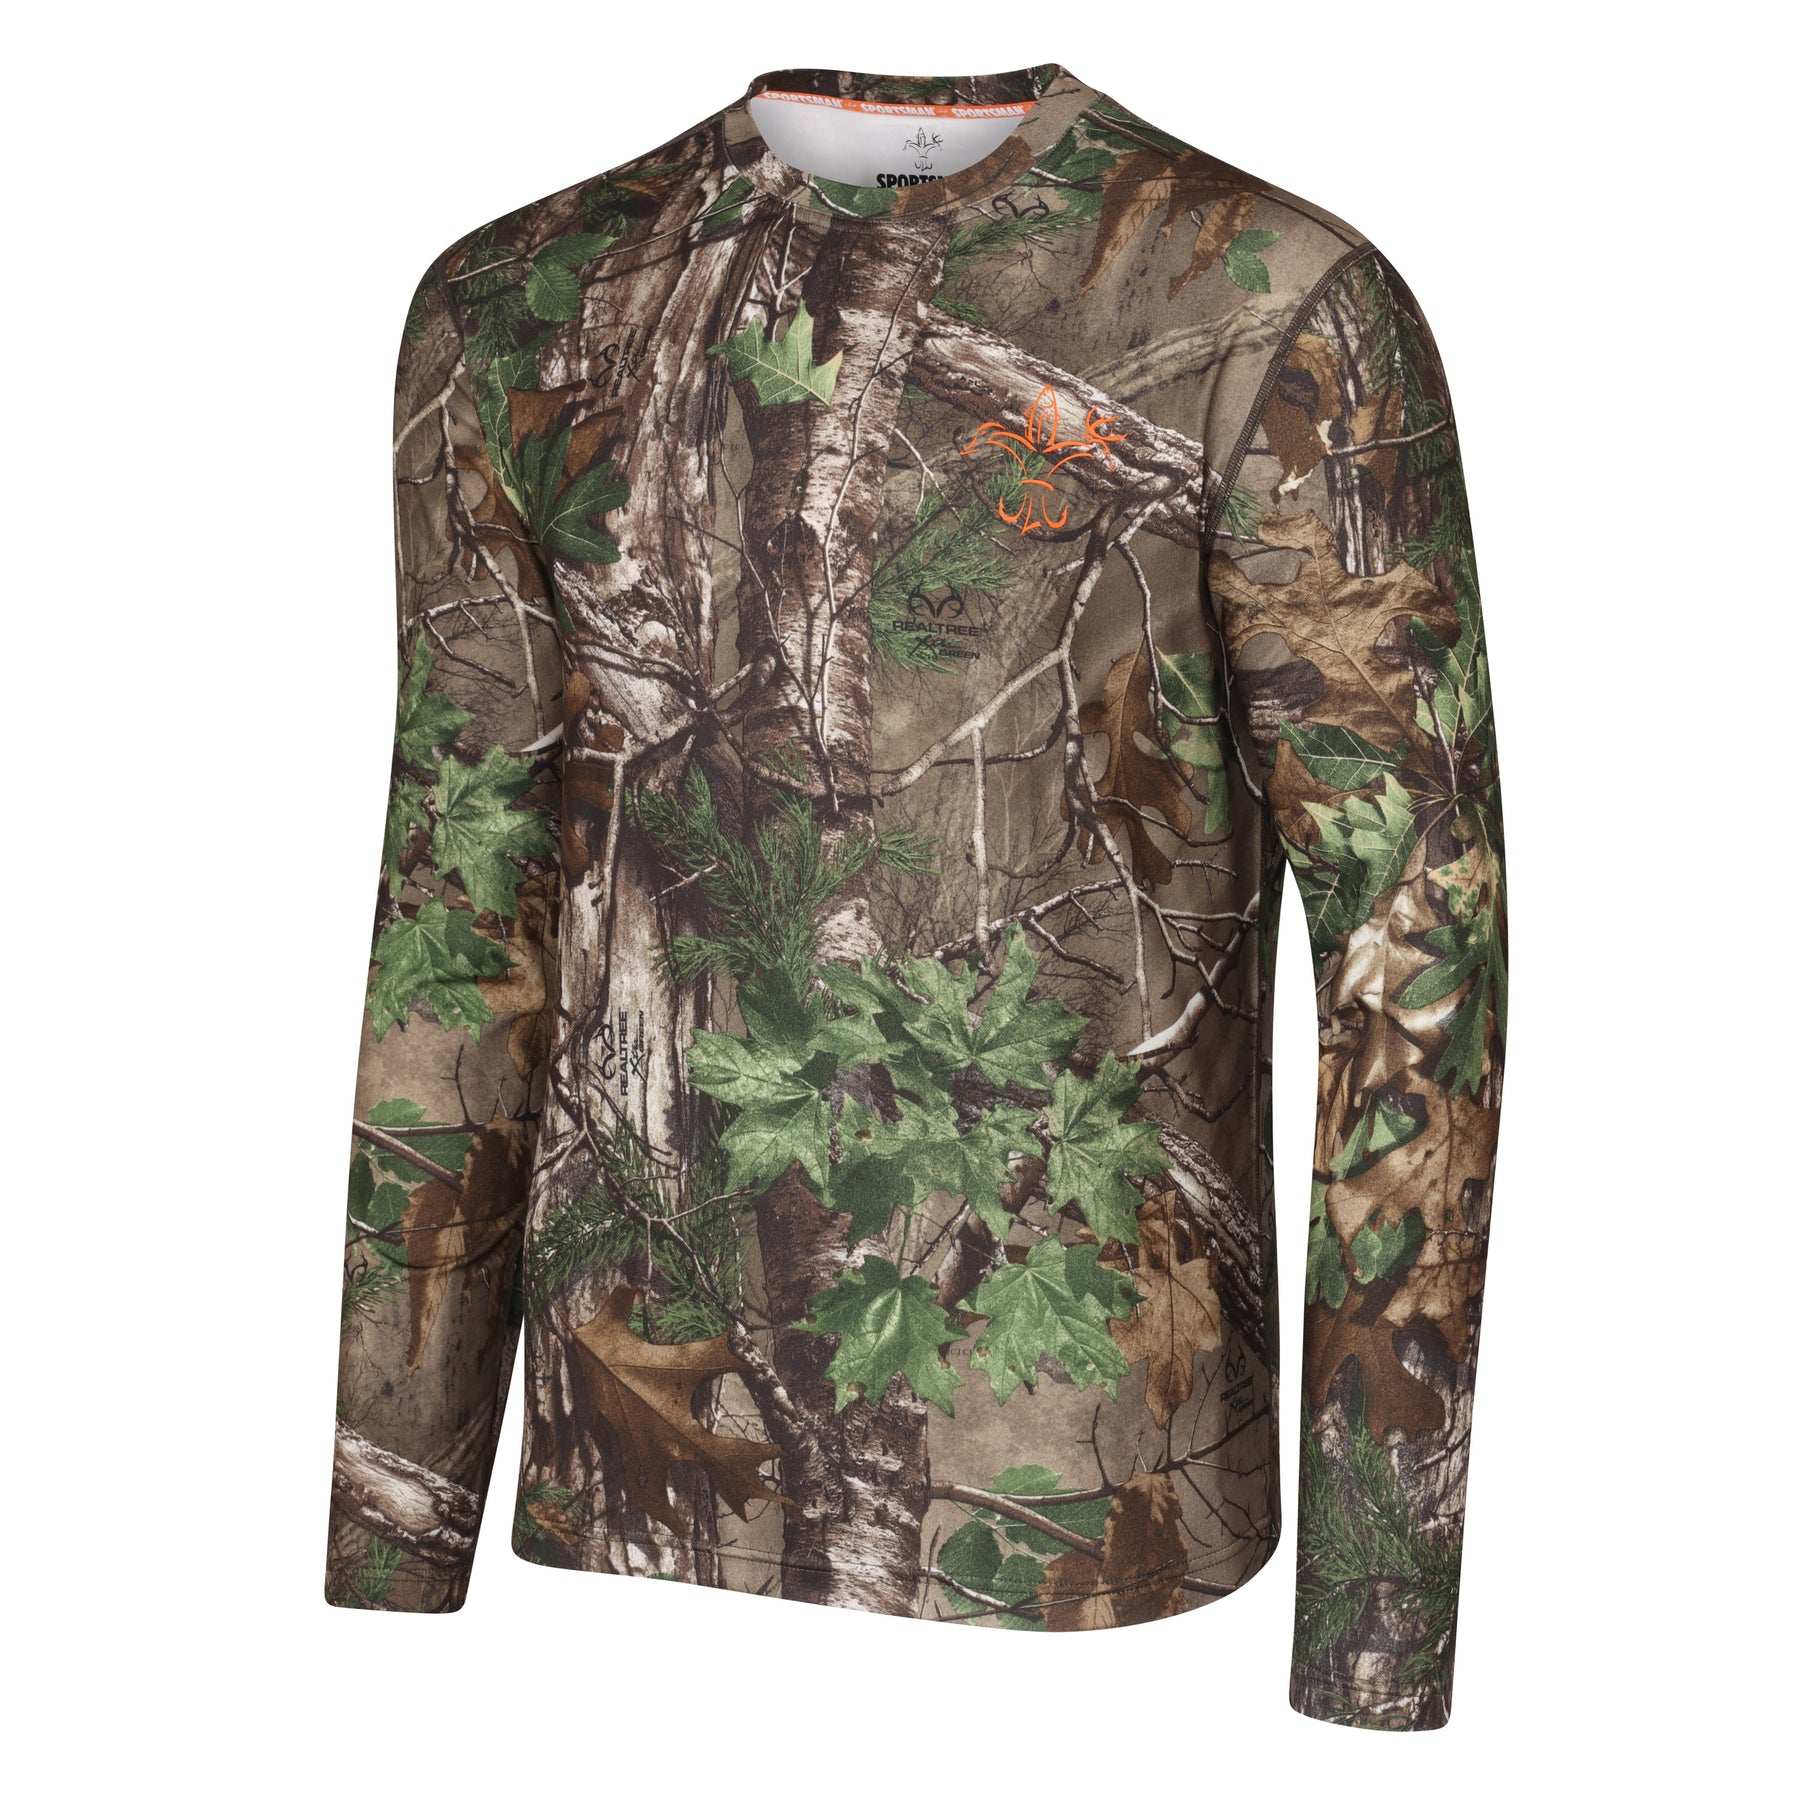 Sportsman Responder Xtra Green Camo Shirt, Long Sleeve Base Layer - woods deer hunting 